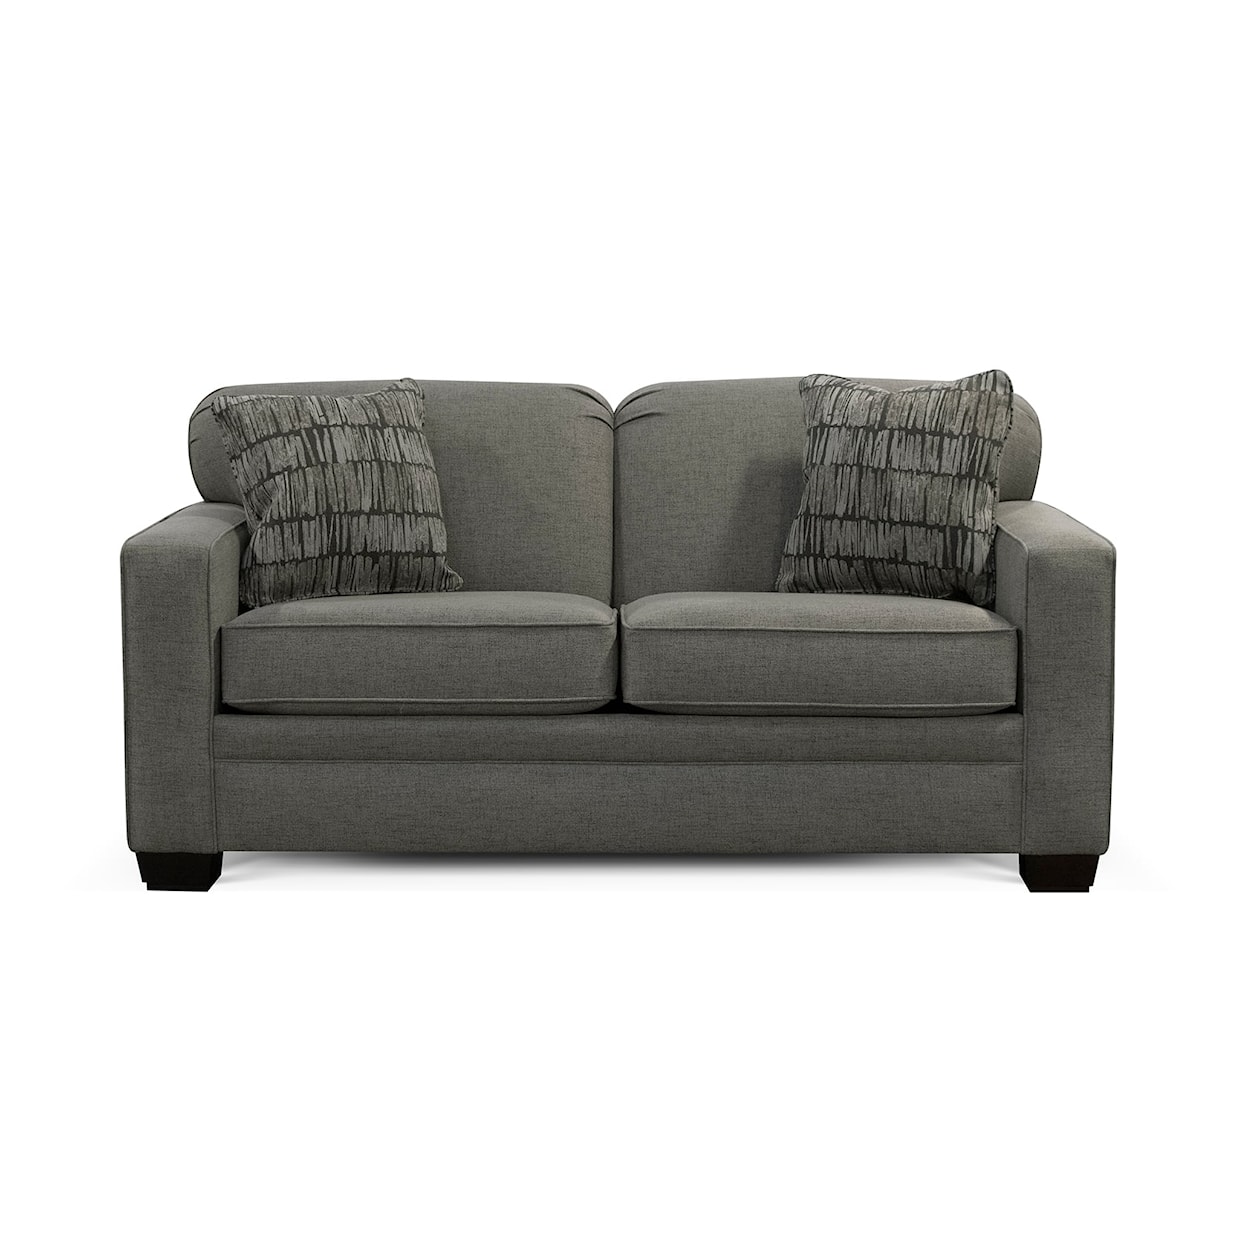 Tennessee Custom Upholstery 6000 Series Full Sized Sleeper Sofa